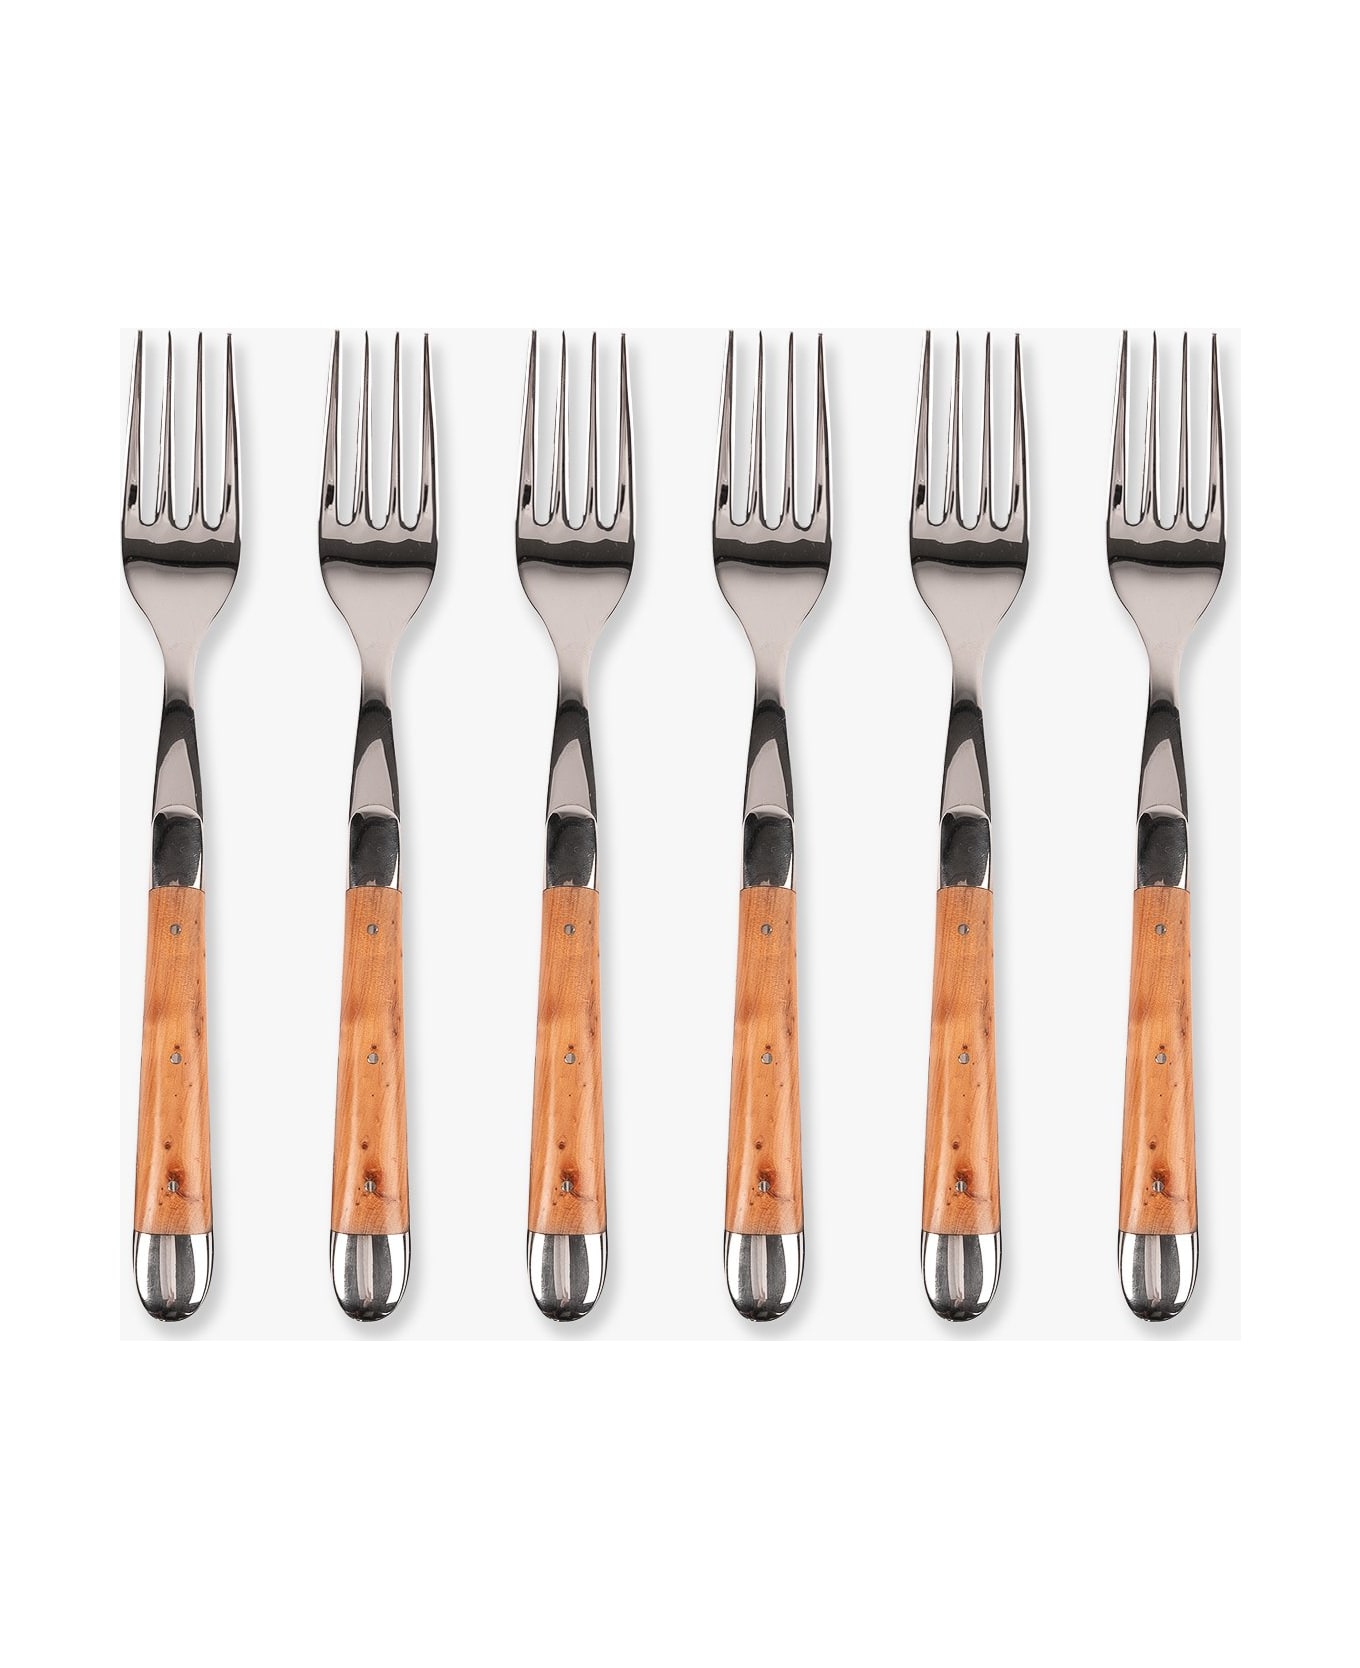 Larusmiani Table Forks - Brown